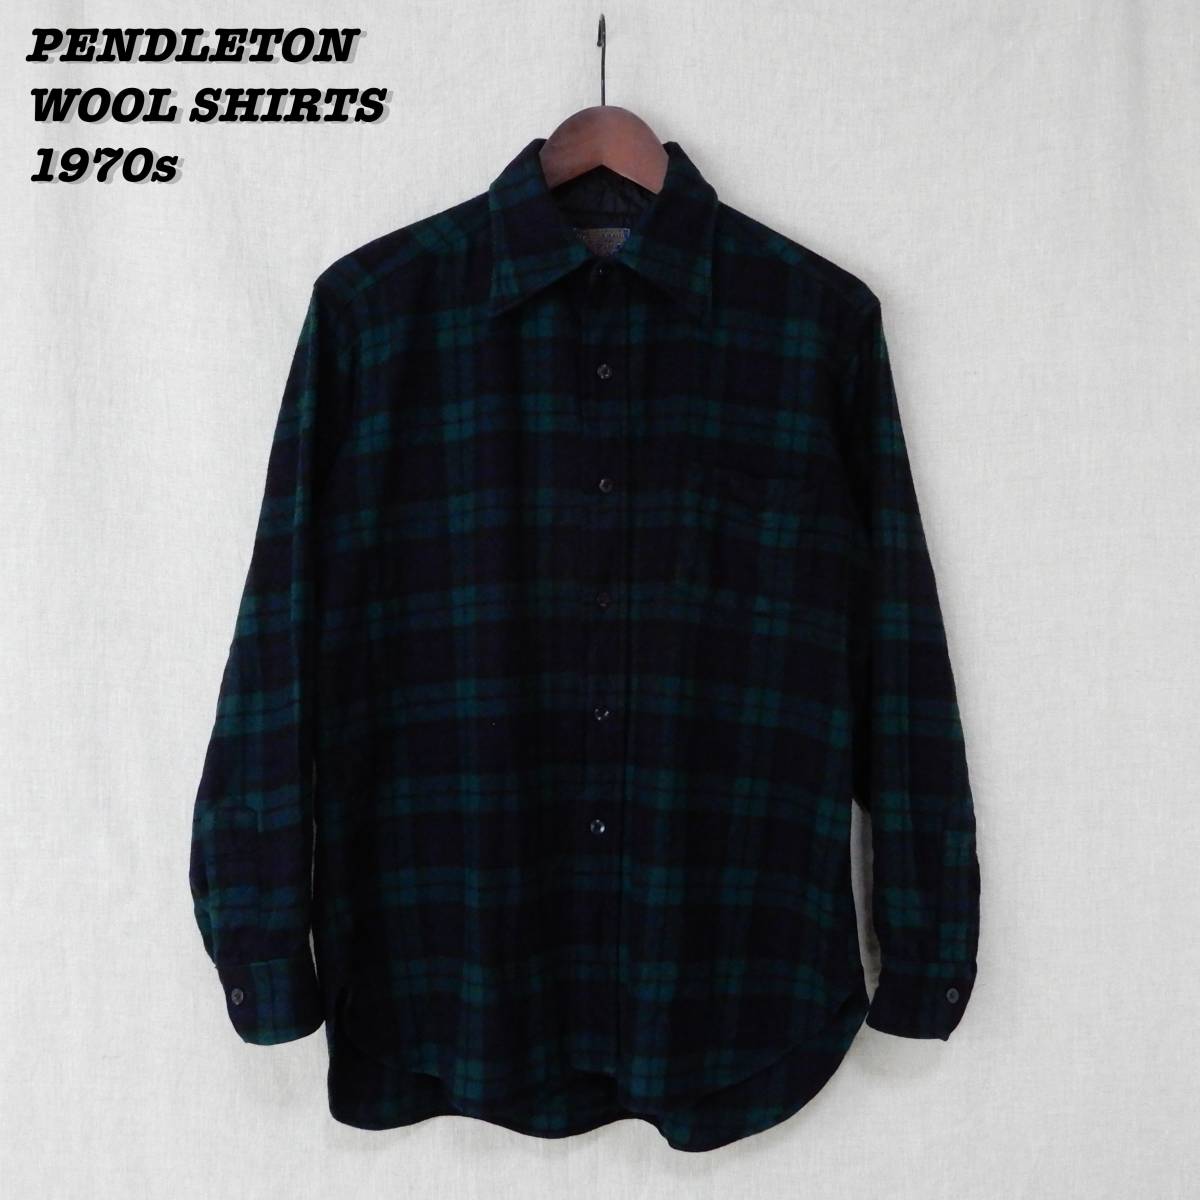 PENDLETON Wool Shirts 1970s L SHIRT23099 Vintage ペンドルトン ウールシャツ 1970年代 ヴィンテージ ブラックウォッチ